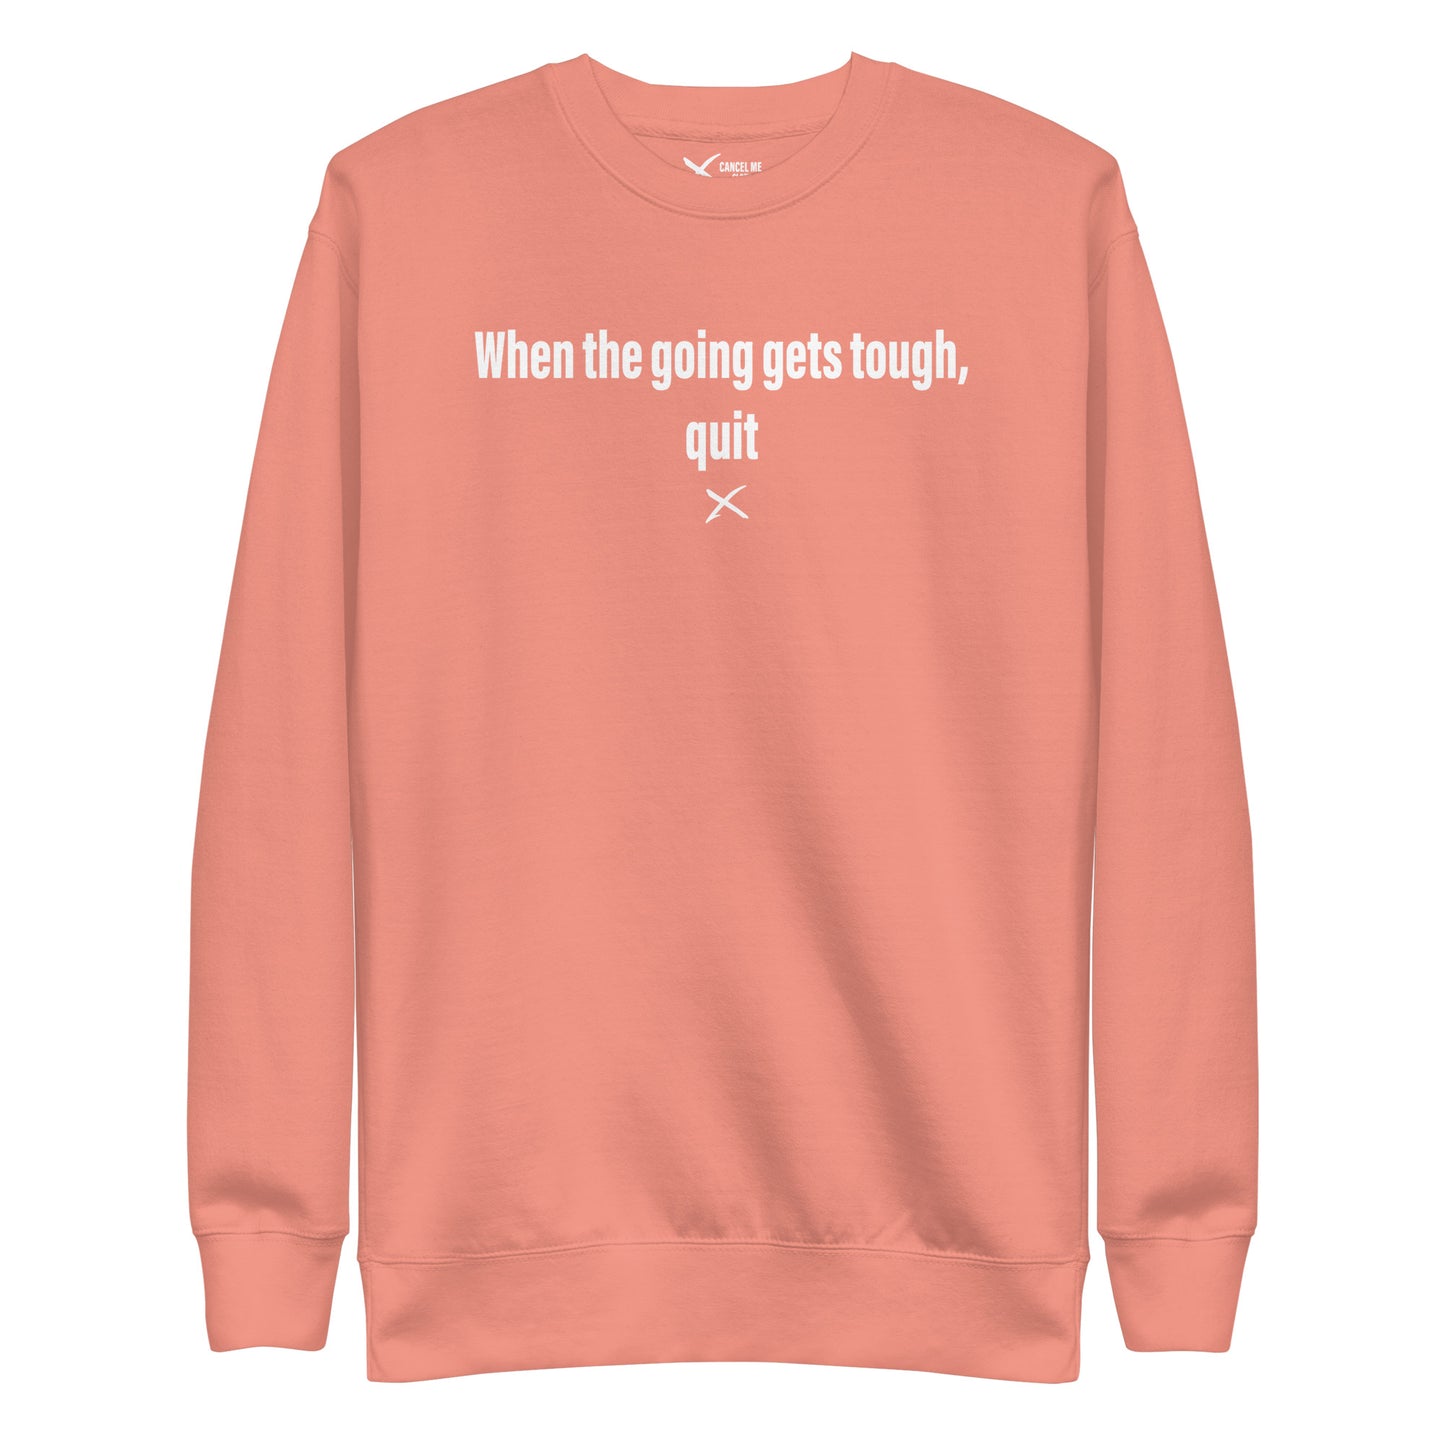 When the going gets tough, quit - Sweatshirt